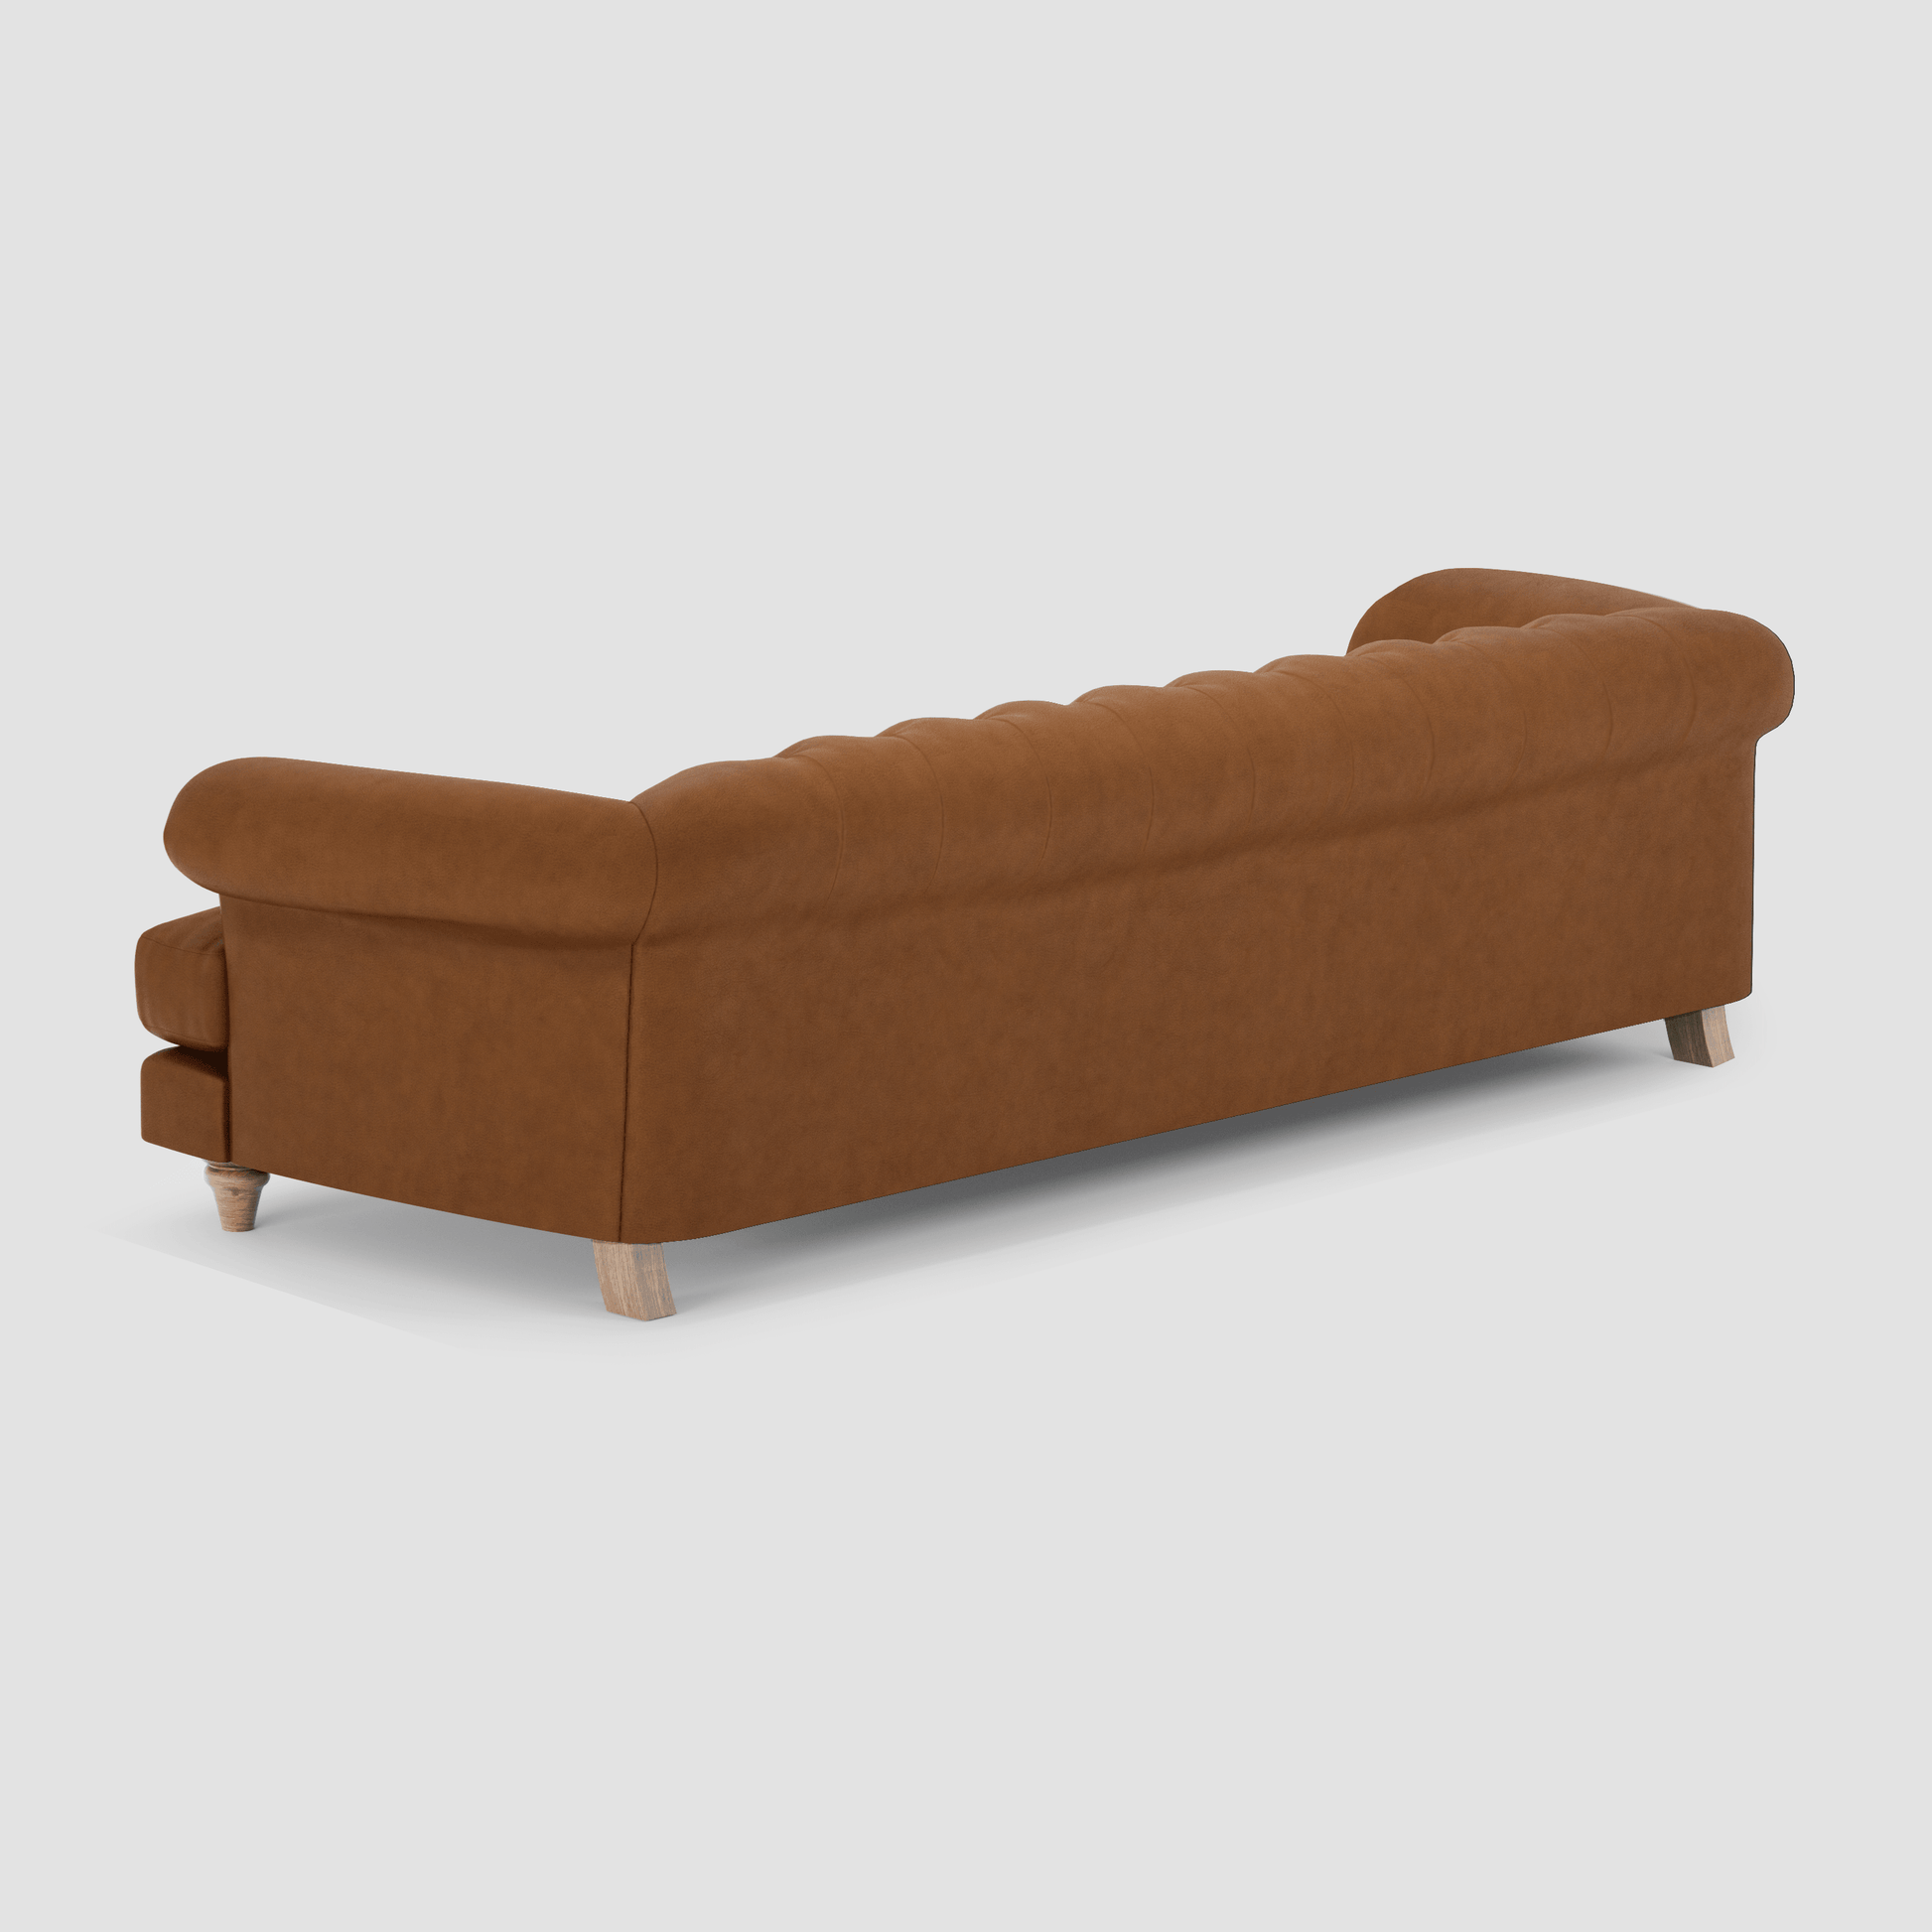 Kimber Four Seater Sofa - Flown the Coop